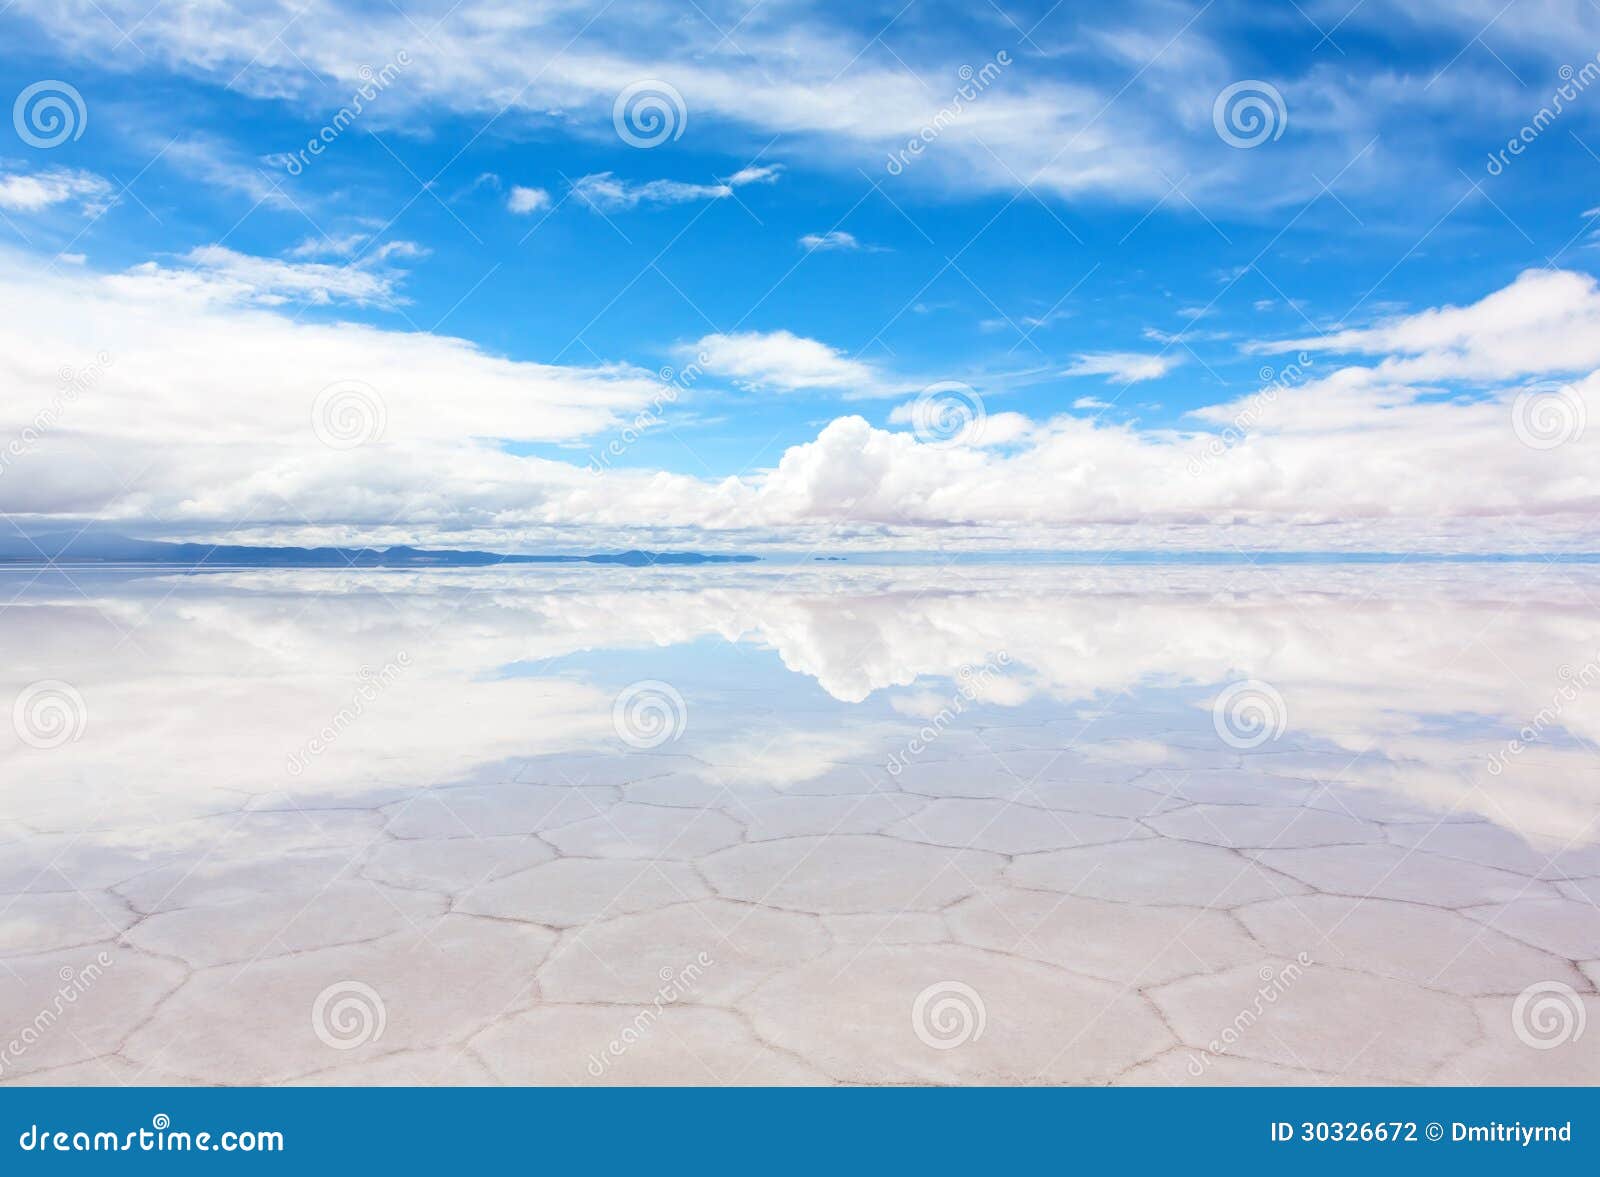 lake salar de uyuni with a thin layer of water